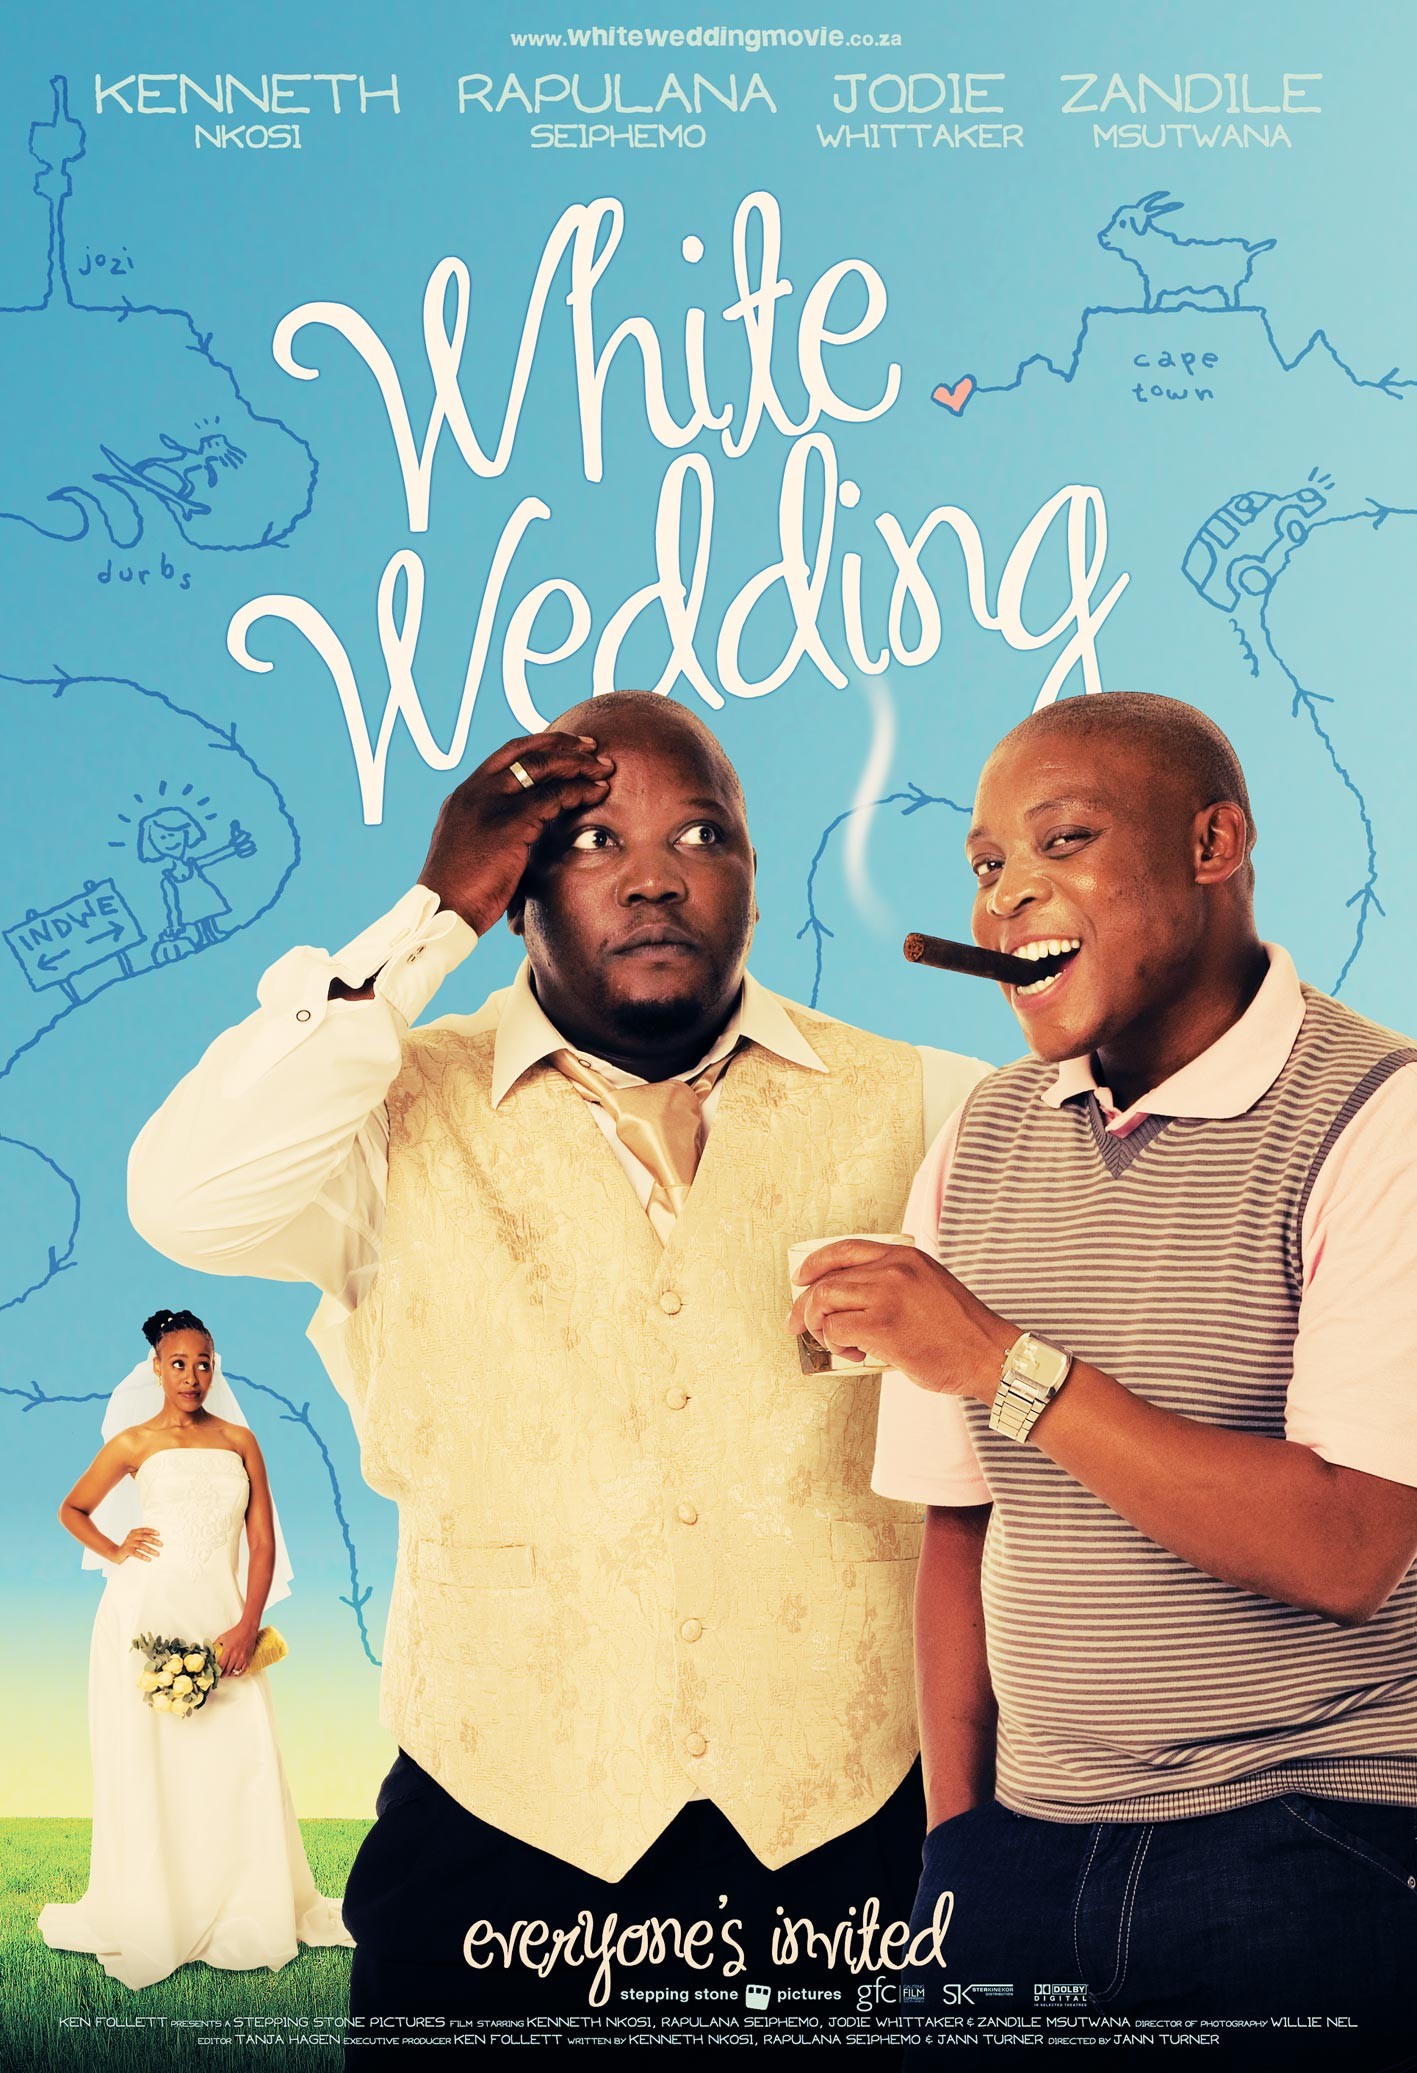 Mega Sized Movie Poster Image for White Wedding (#2 of 2)